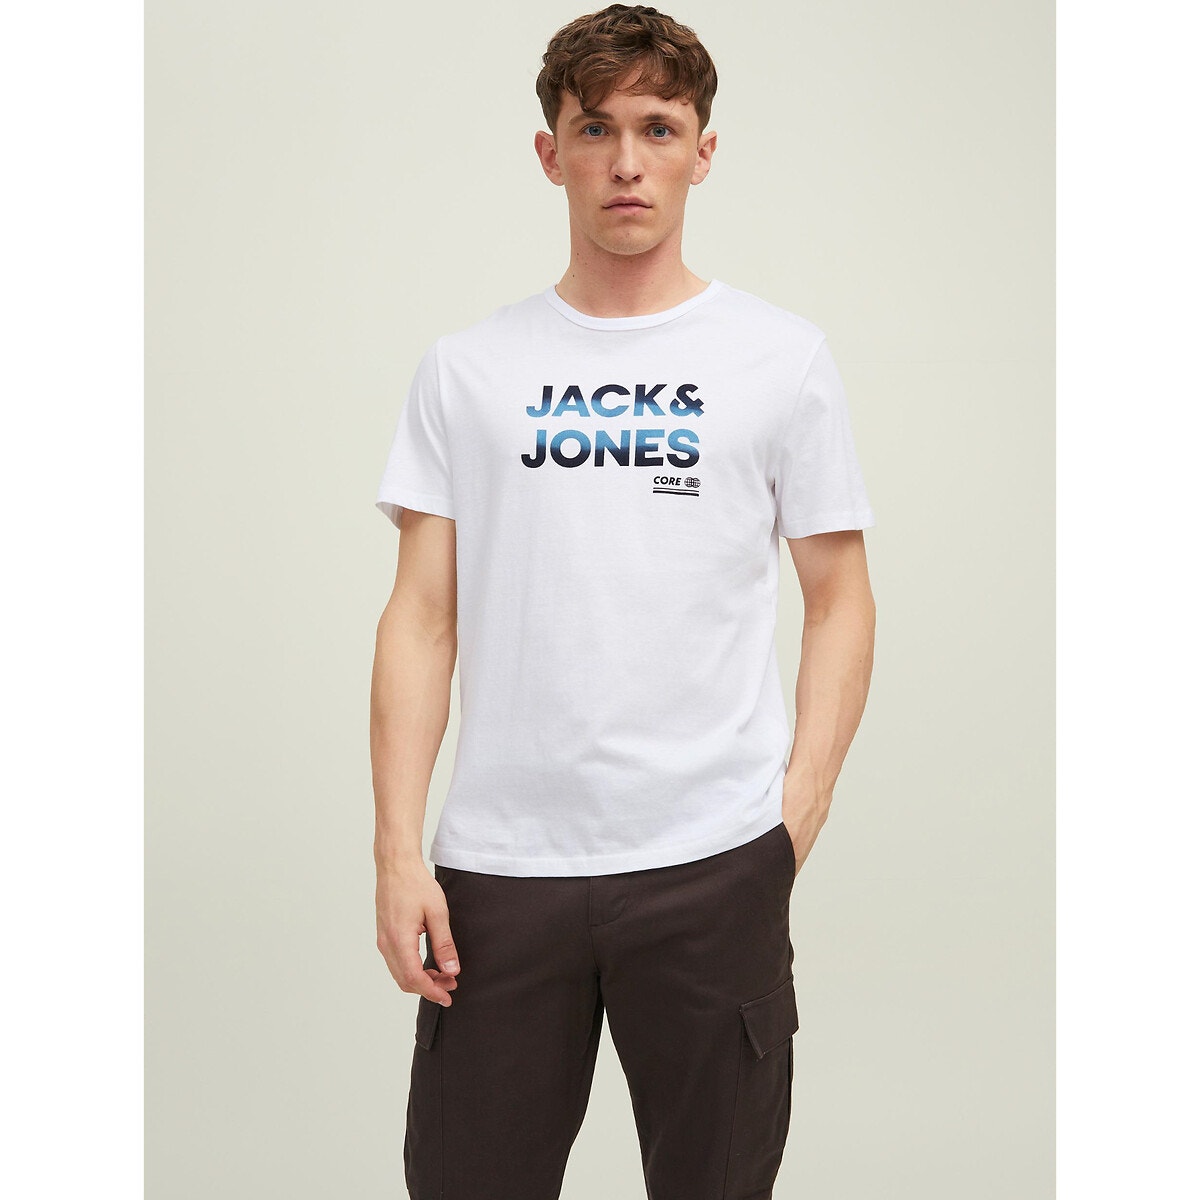 T-shirt με στρογγυλή λαιμόκοψη, Jcoseth